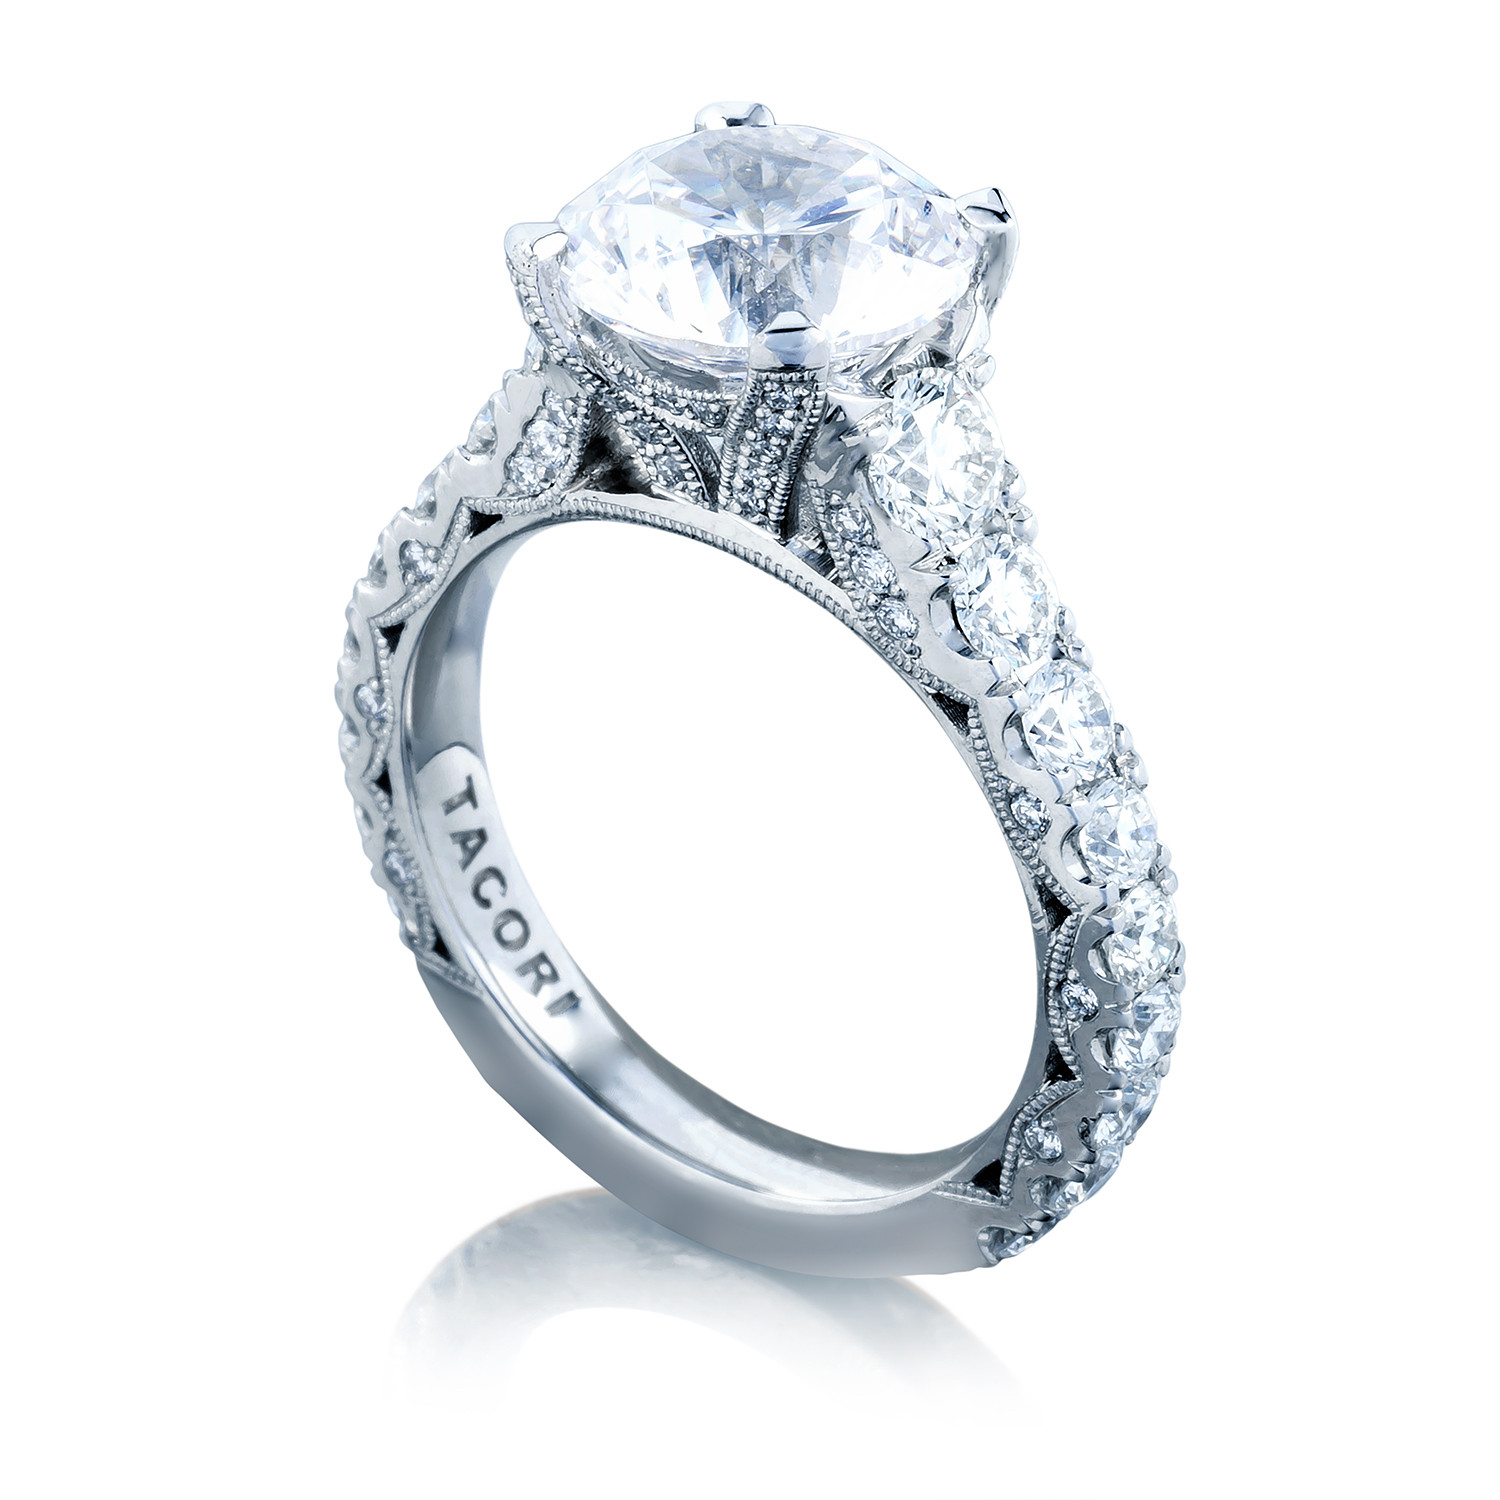 Tacori Wedding Ring
 Tacori Engagement Rings RoyalT Round Setting 1 65ctw